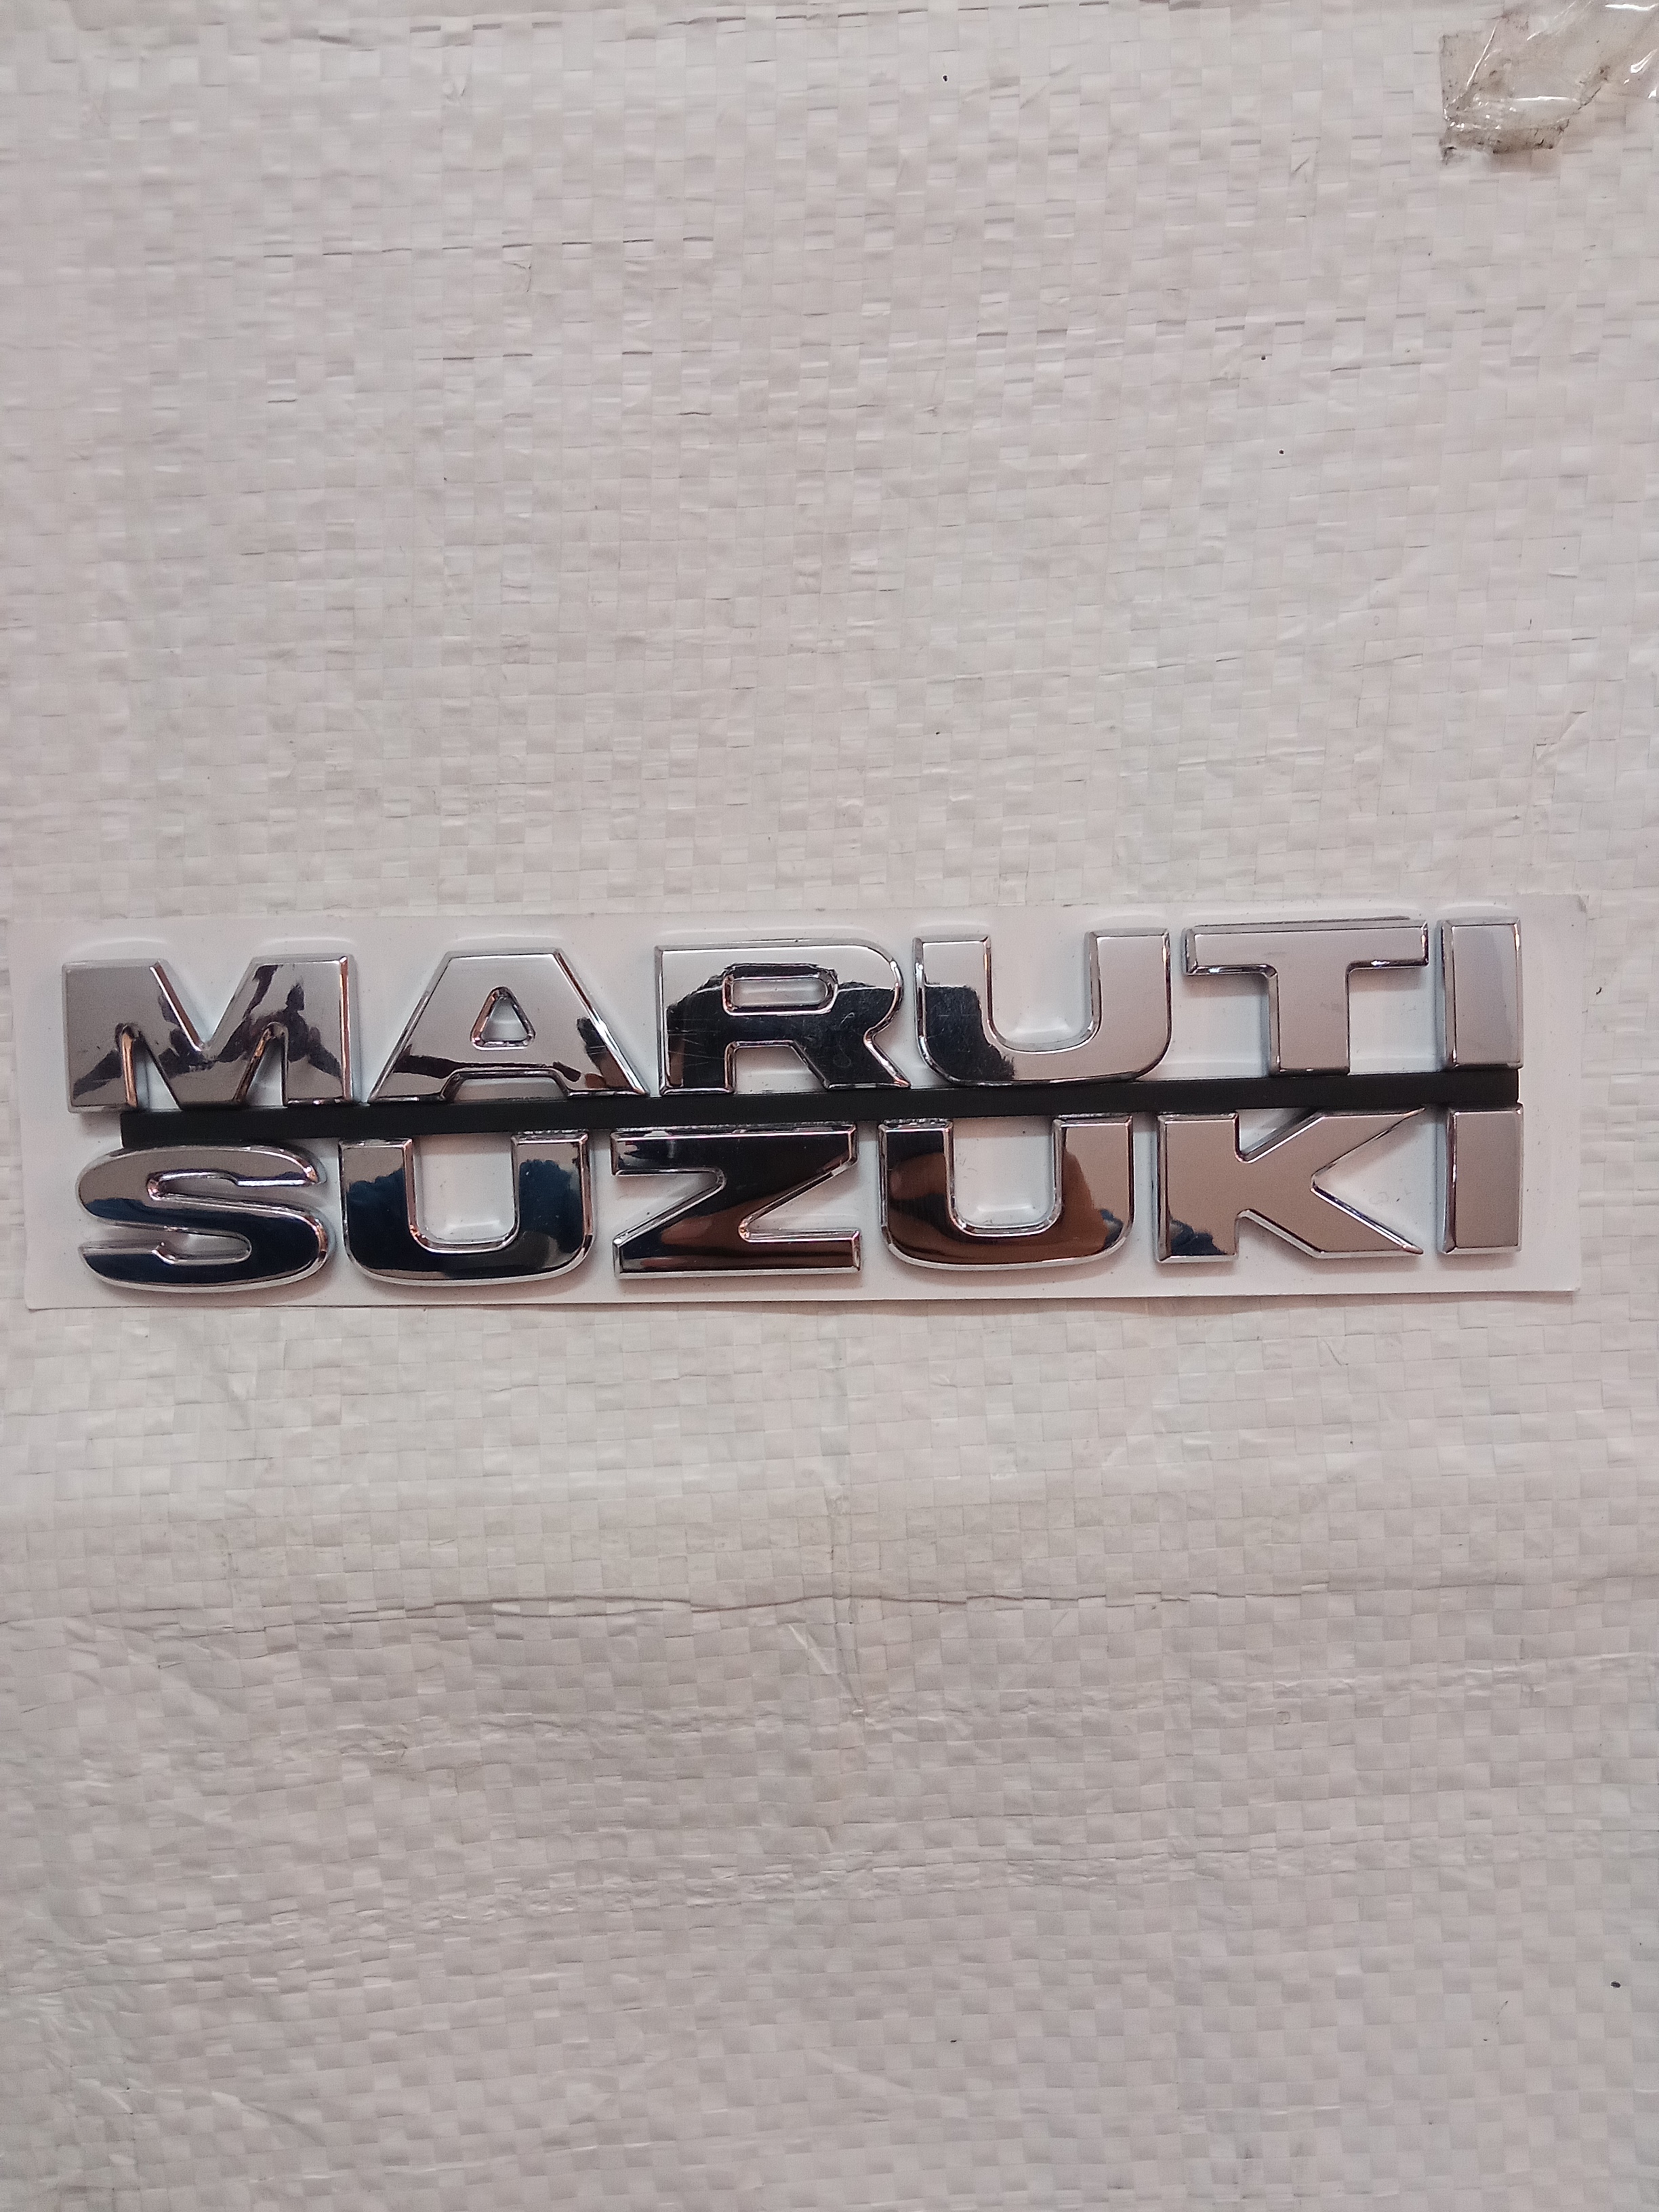 SUZUKI SWIFT EMBLEM MARUTI SUZUKI           77821M79F00      STOCKID 1770